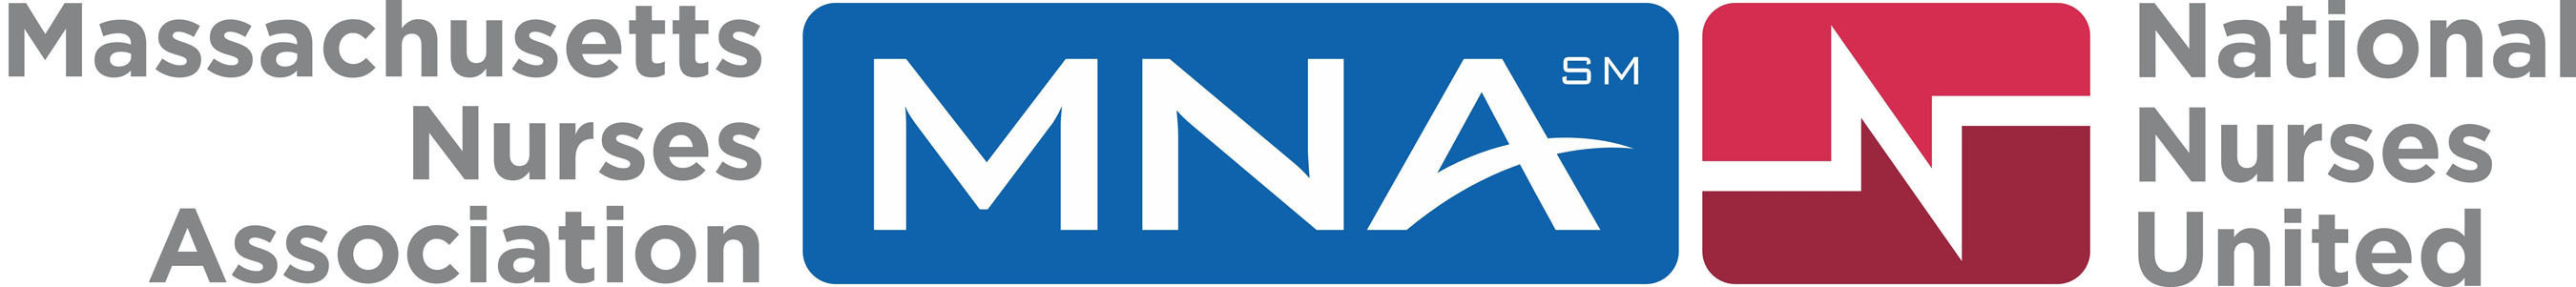 Massachusetts Nurses Association logo.